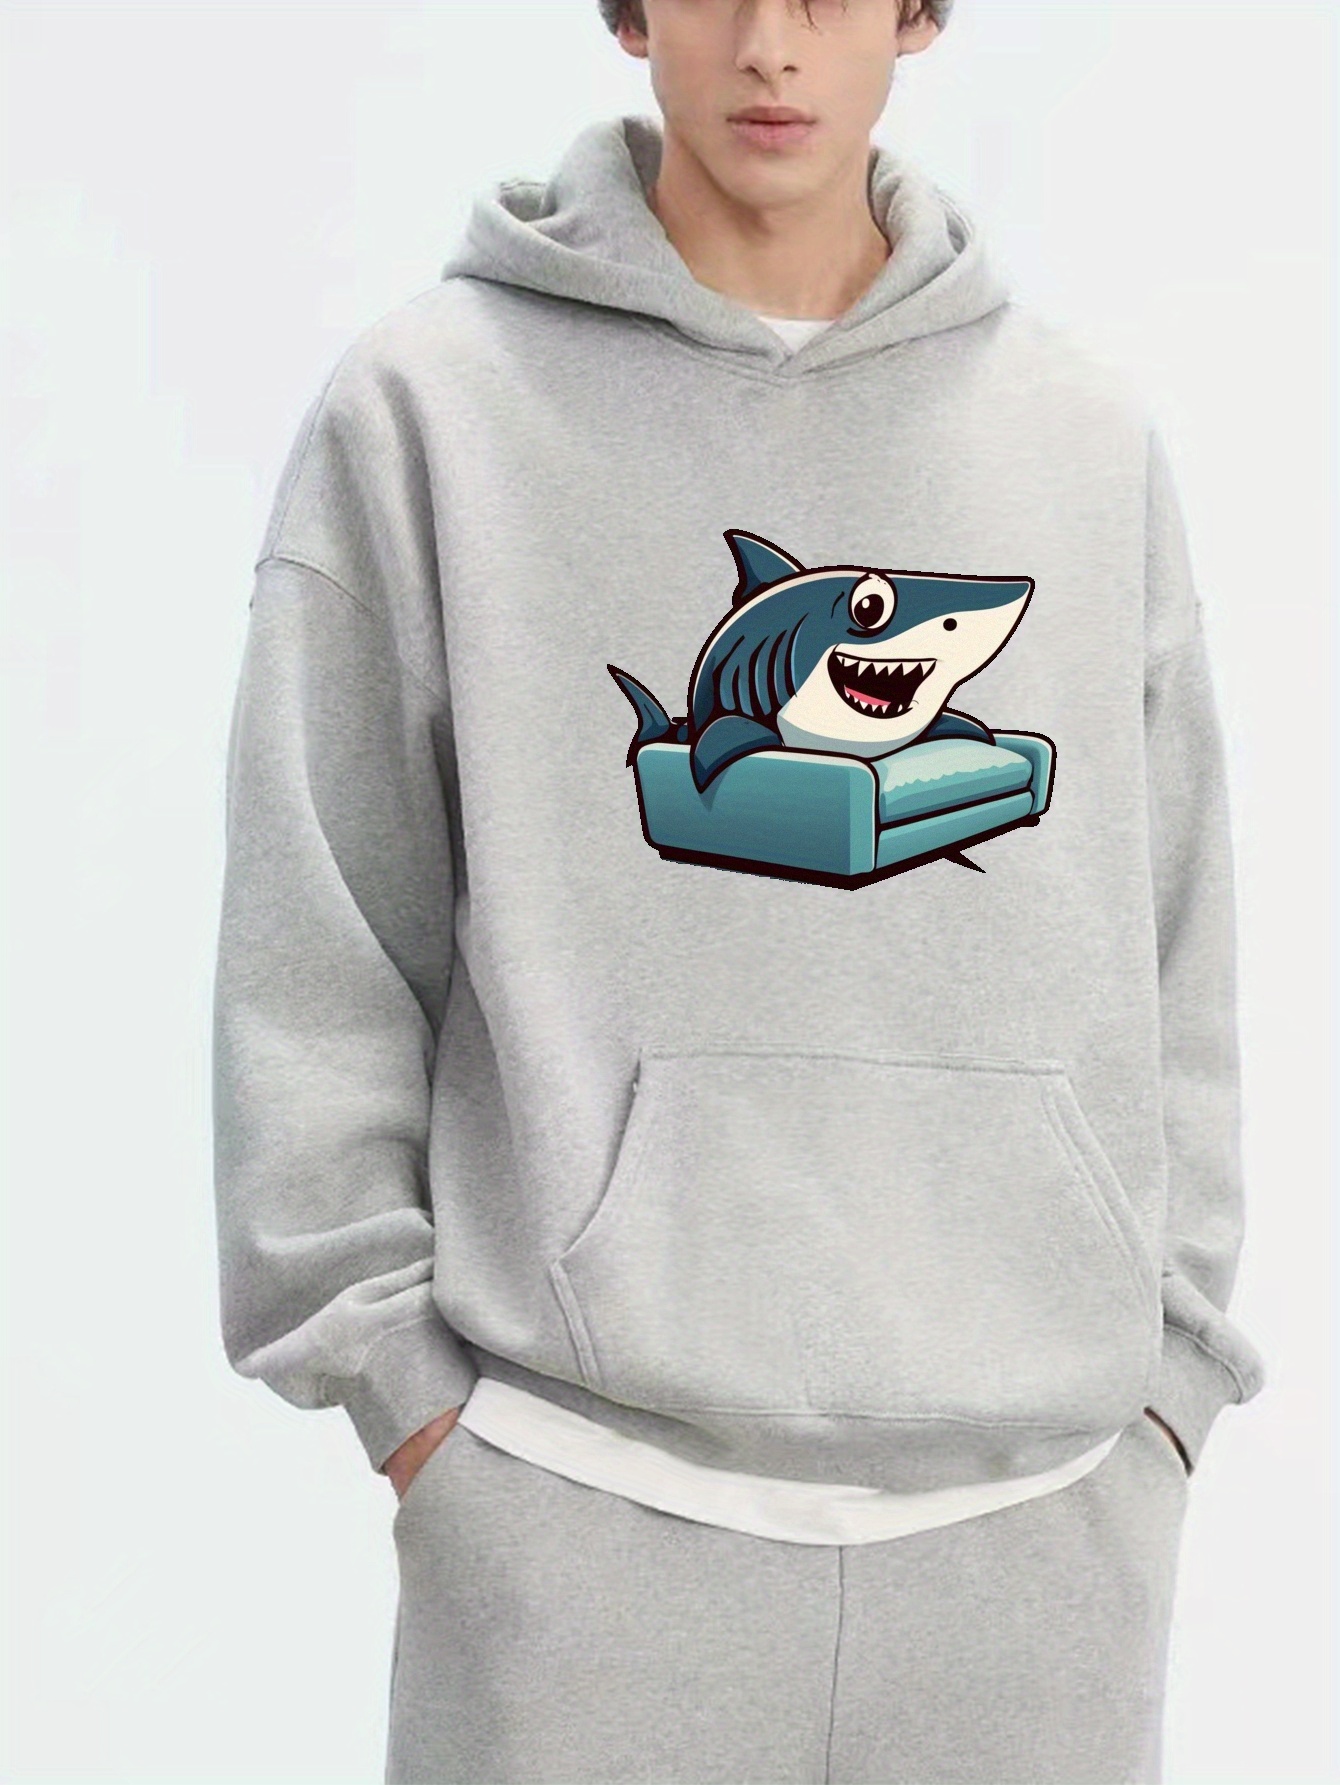 New Hoodies Sweatshirts For Men Deep-Sea Fish Print Pattern Autumn